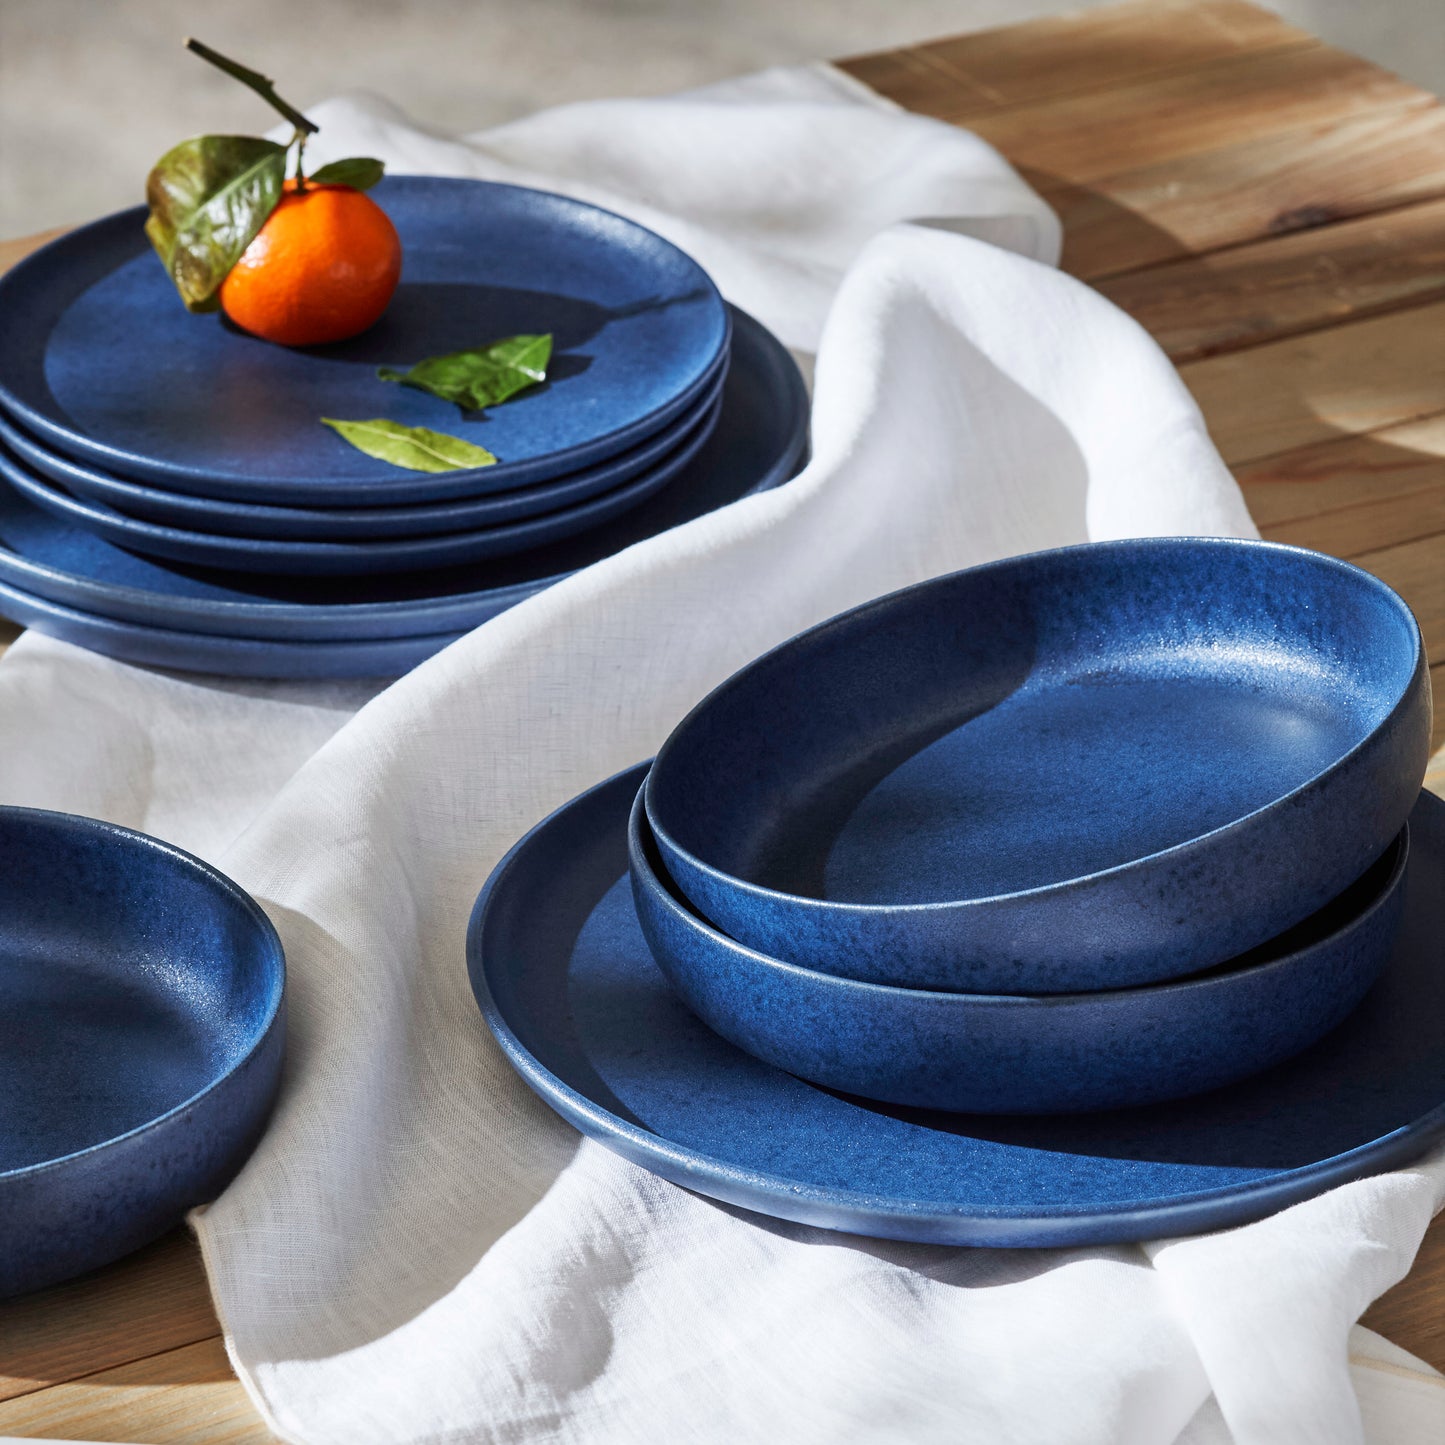 Macchio Stoneware Dinnerware Set - Blue Matte - Crafted in Portugal - Scratch-Resistant